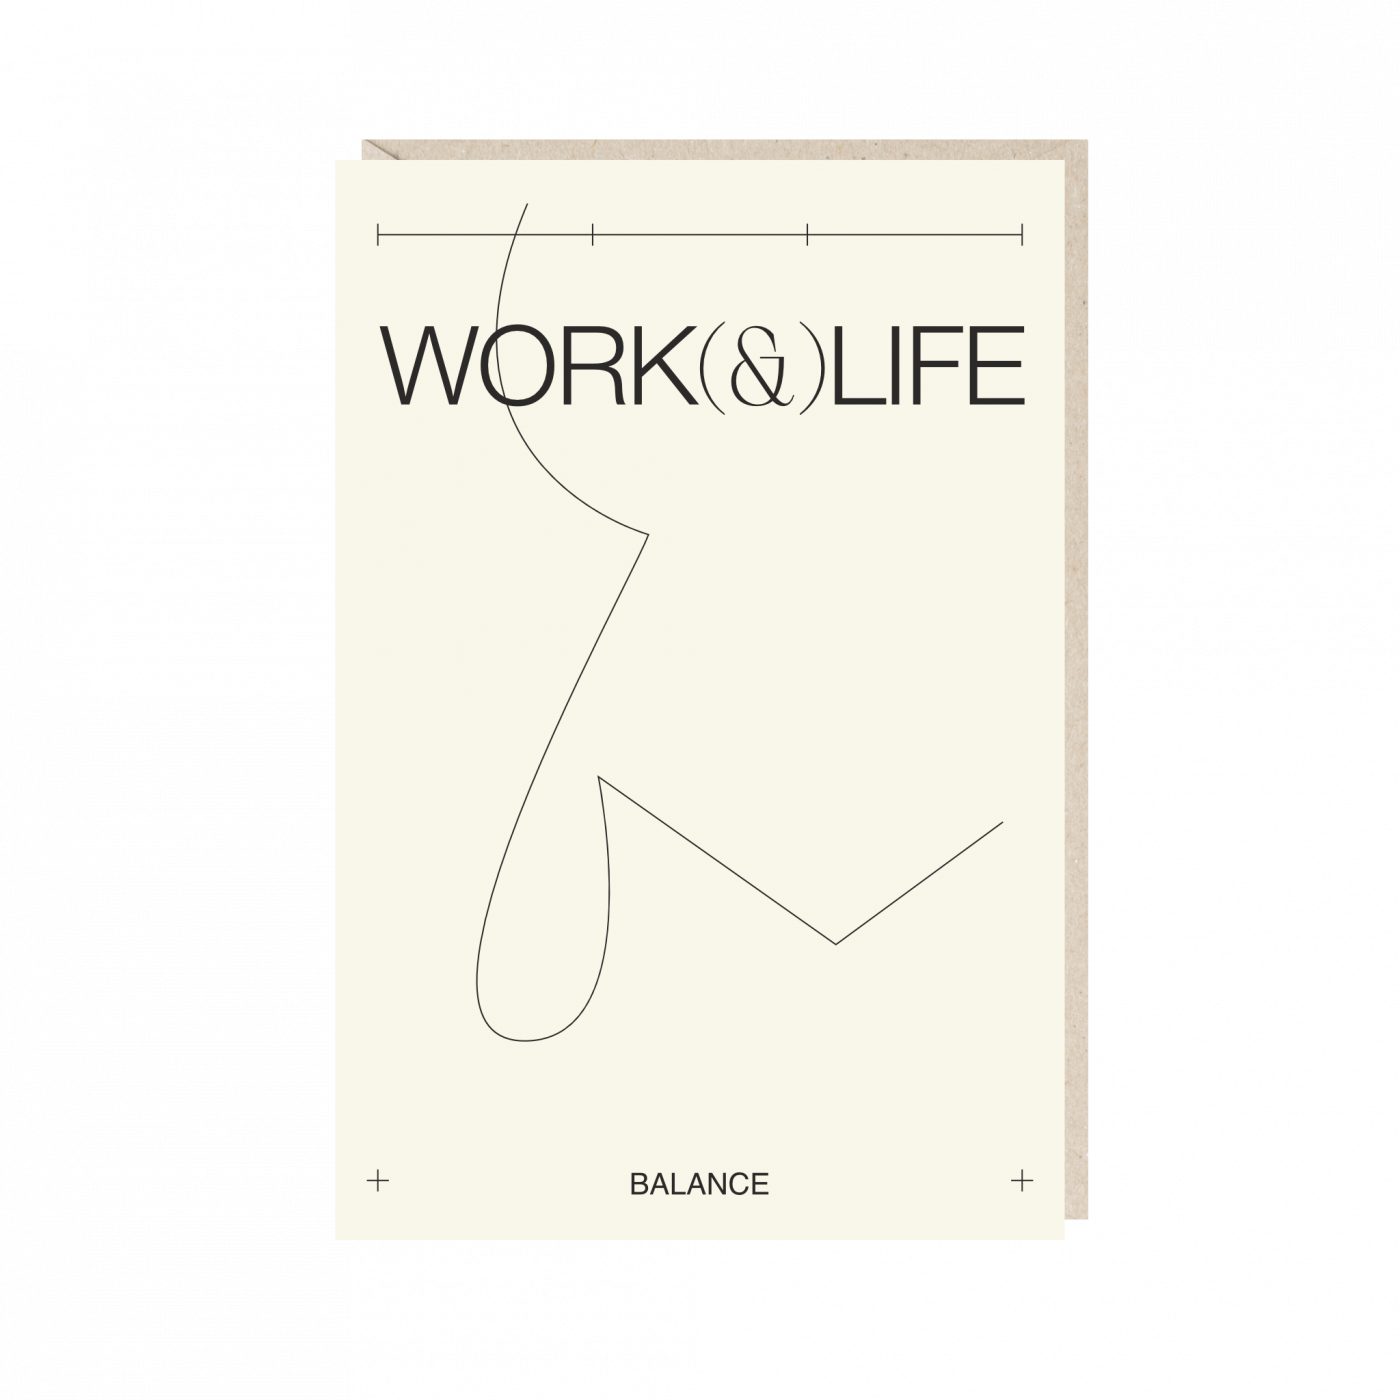  work & life balance